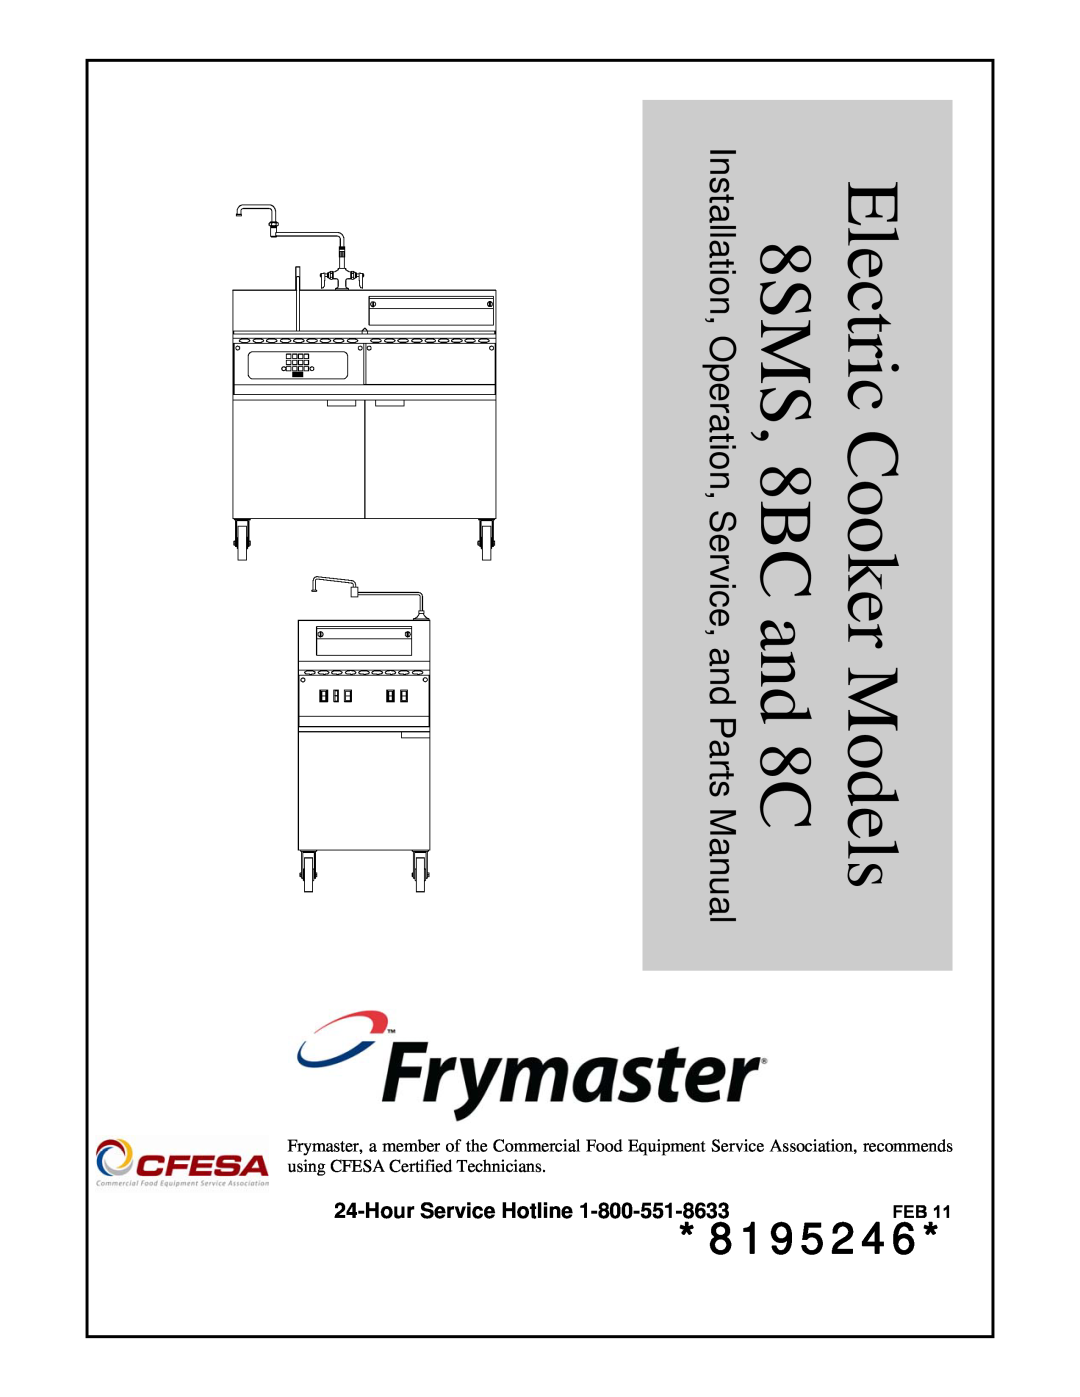 Frymaster 8BC, 8SMS, 8C manual 8195246, Hour Service Hotline 